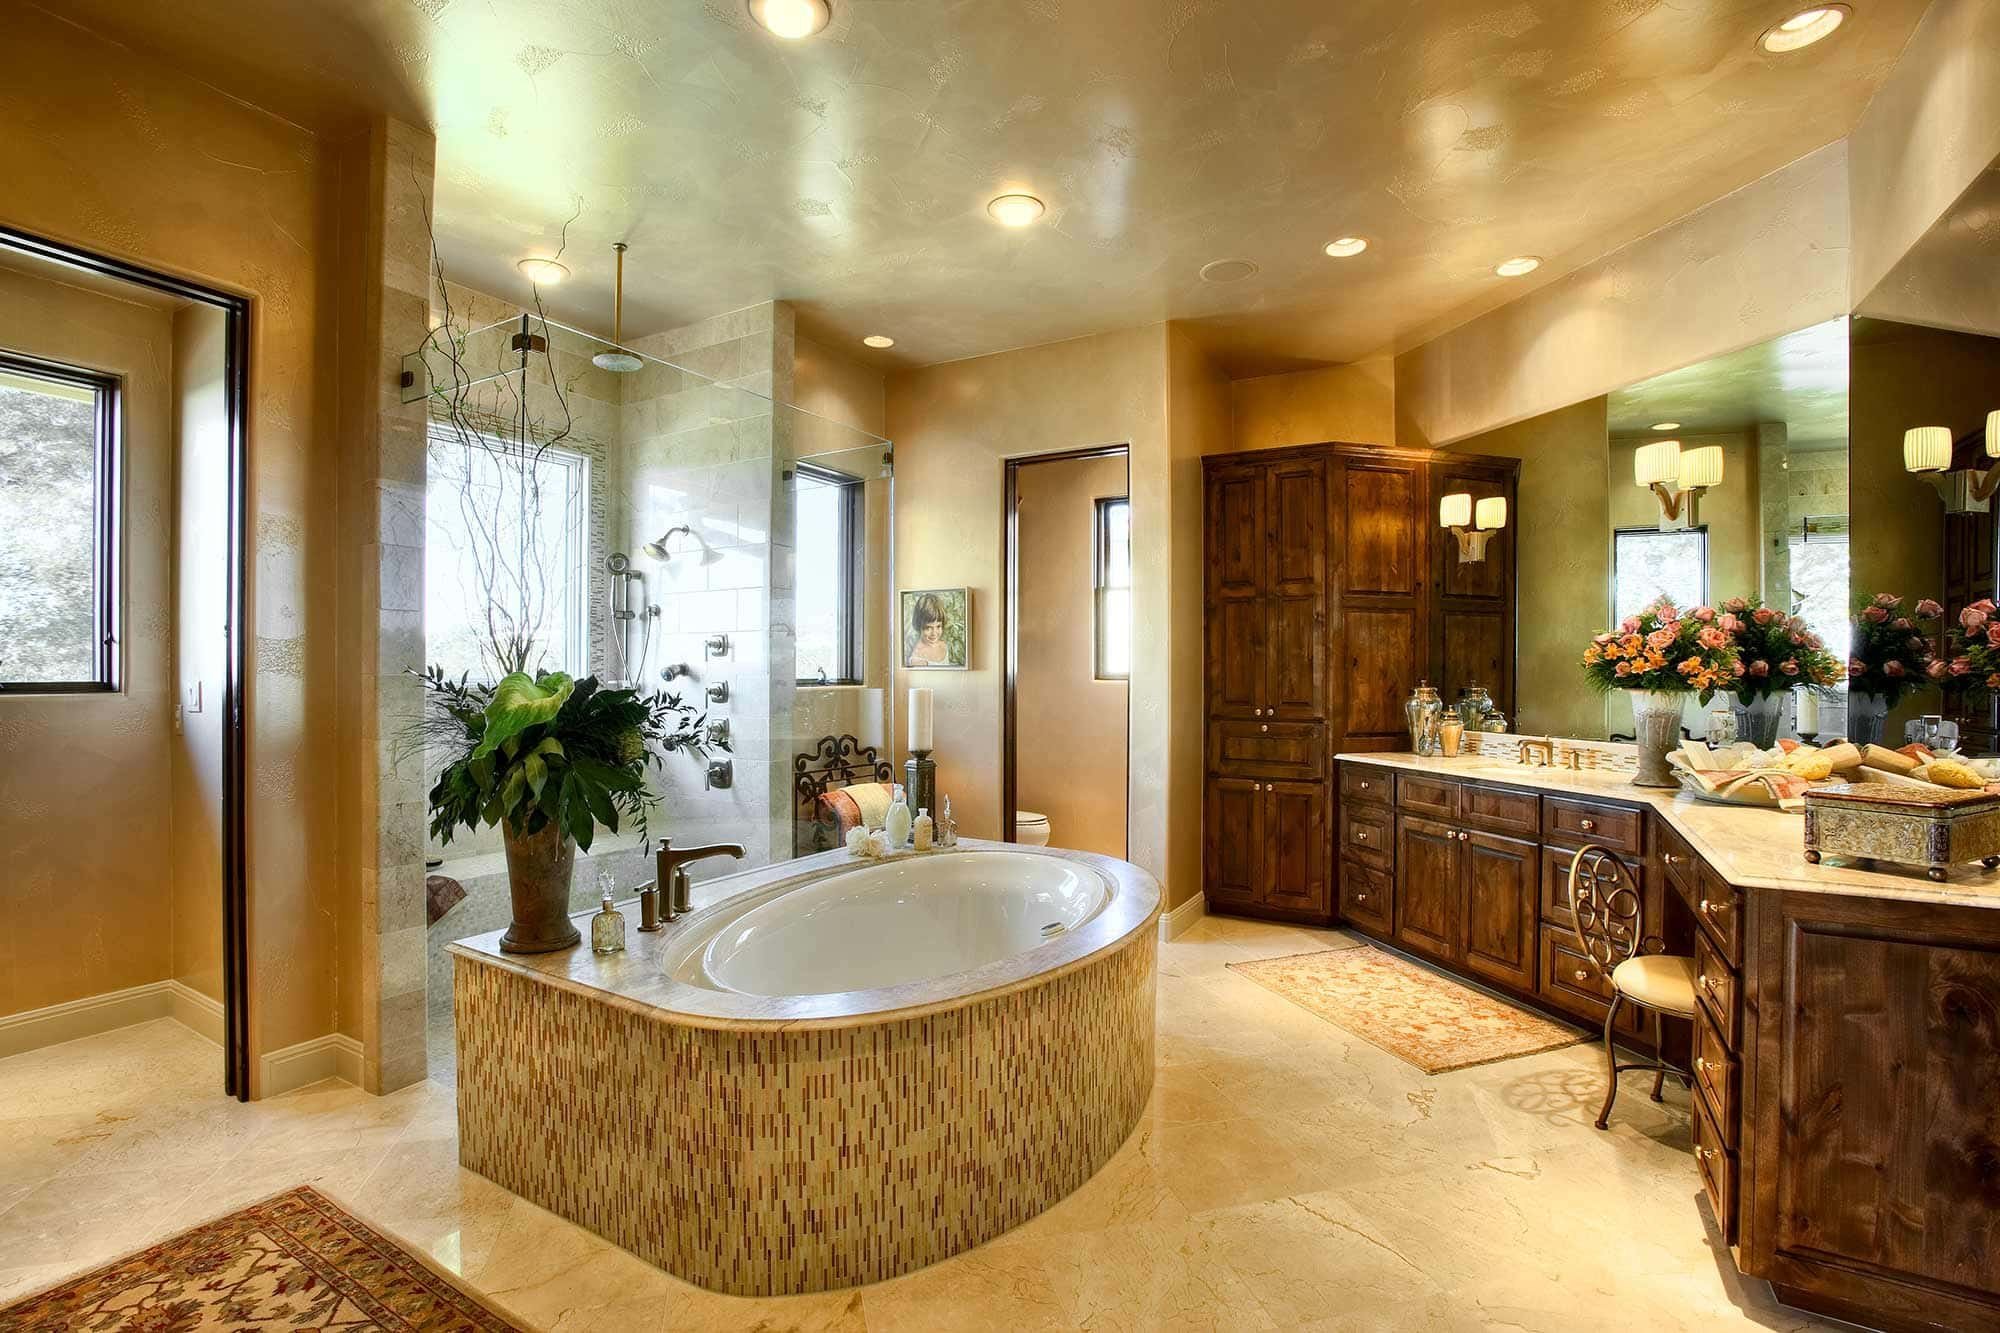 Ванная комната шире ванны. Роскошные Ванные комнаты. Красивая ванная комната. Красивые интерьеры ванных комнат. Роскошная ванная комната.